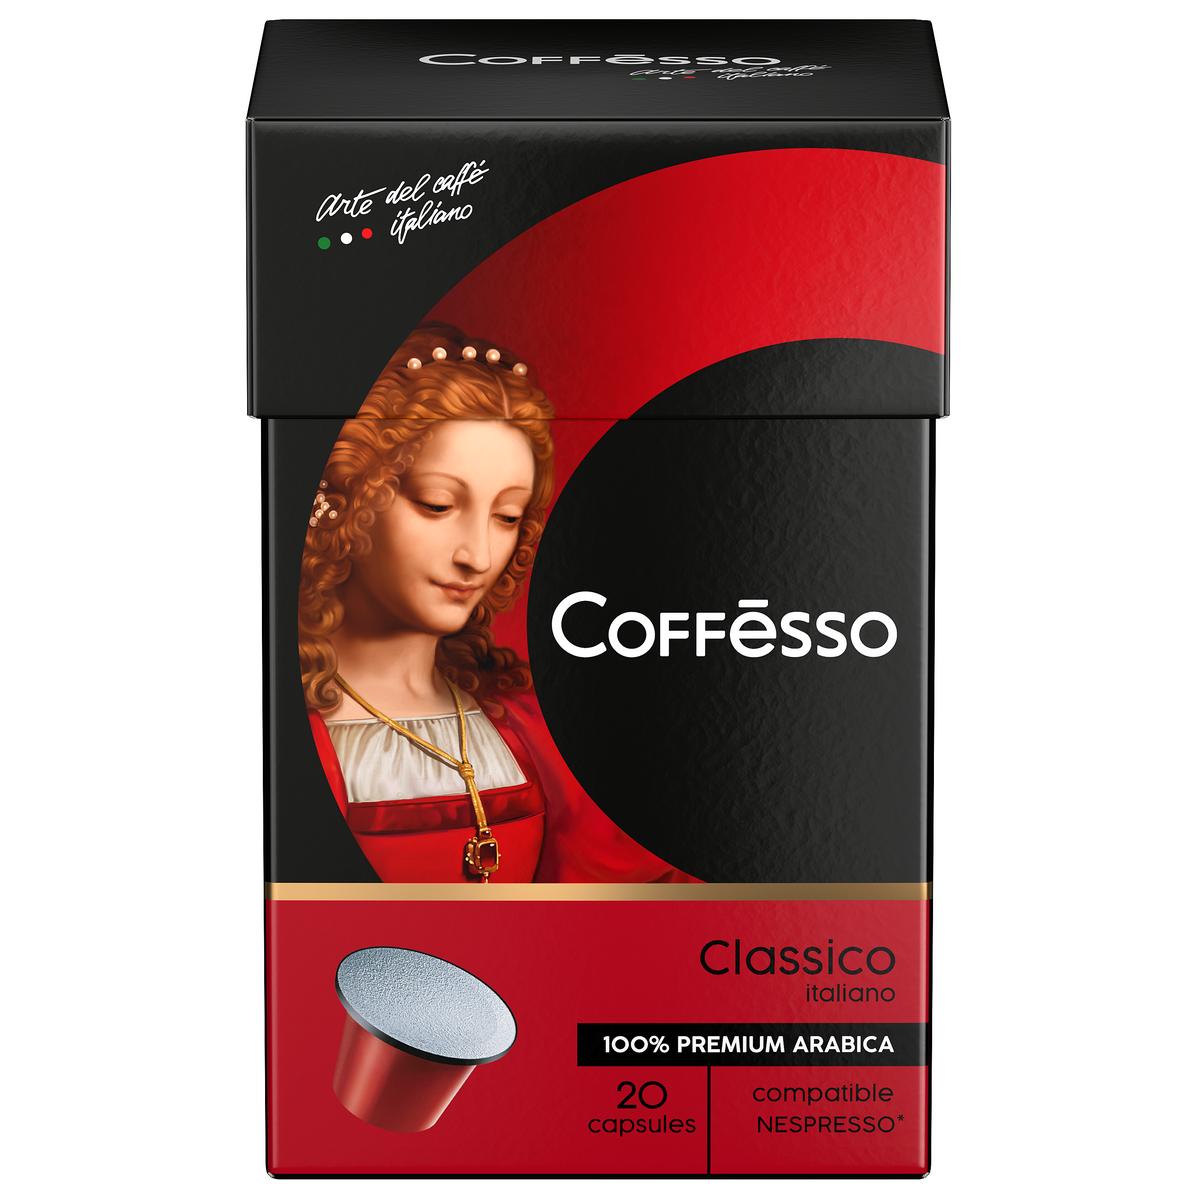 Купить кофе Coffesso "Classico Italiano", в капсулах для кофемашины Nespresso, 20 капсул, цены на Мегамаркет | Артикул: 600003265691